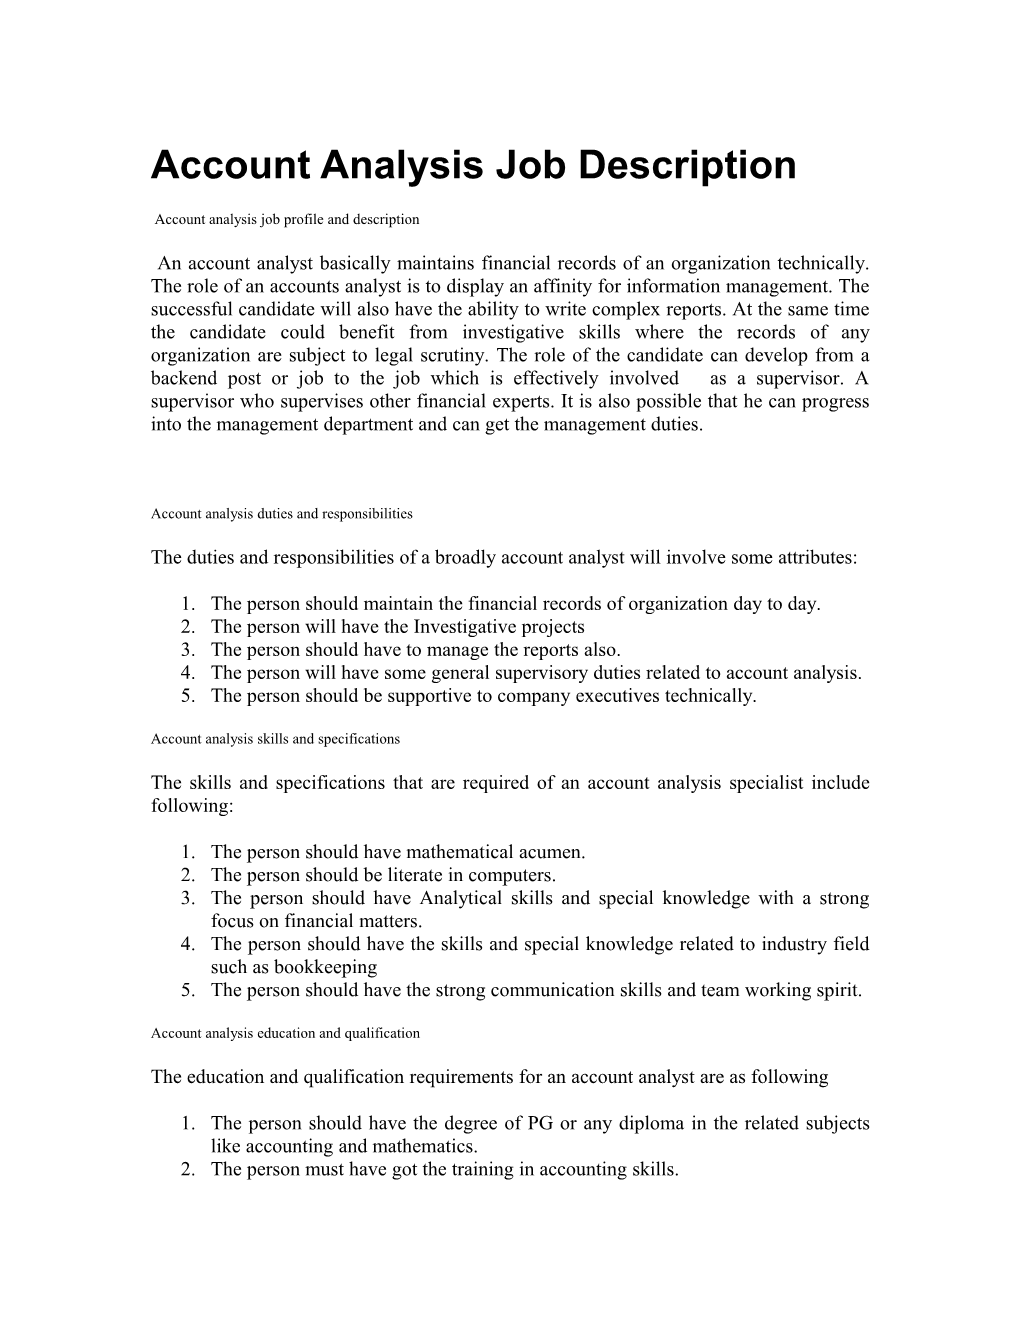 Account Analysis Job Description